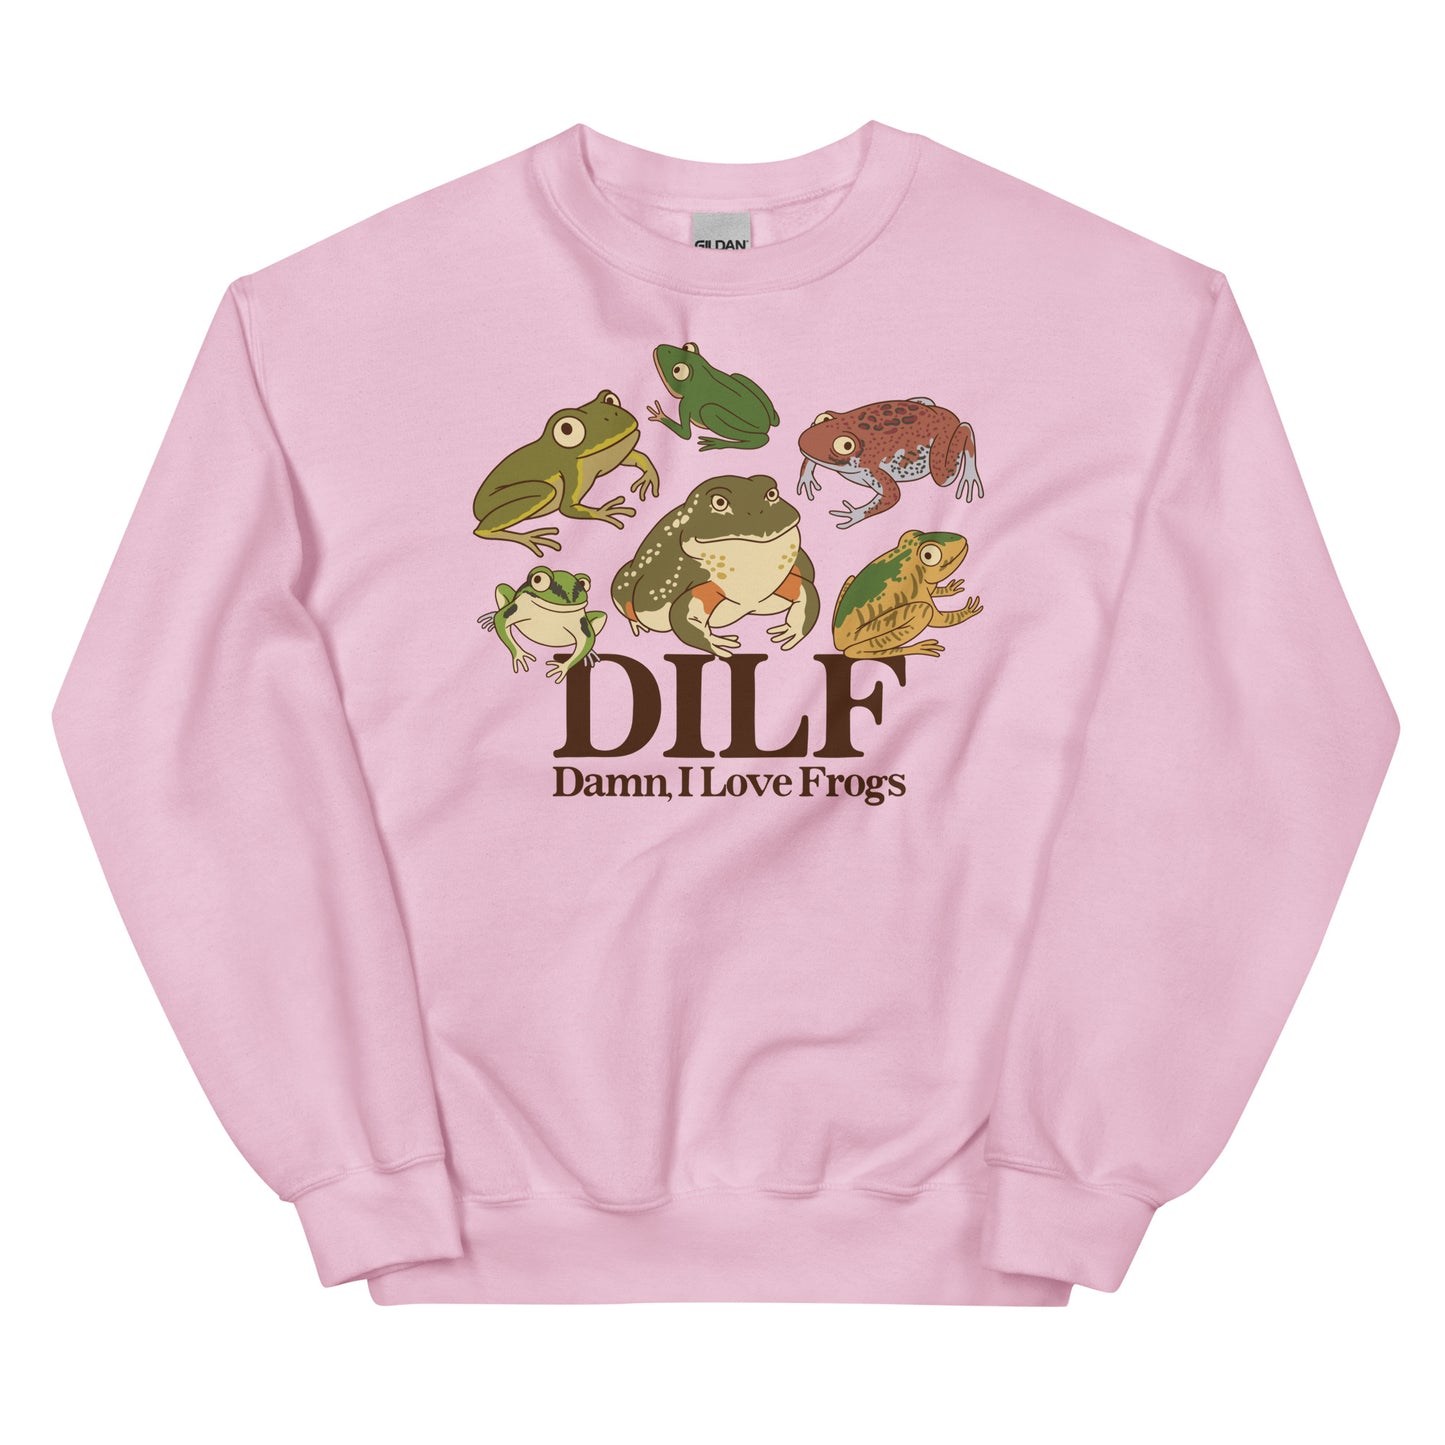 DILF (Damn, I Love Frogs) Unisex Sweatshirt